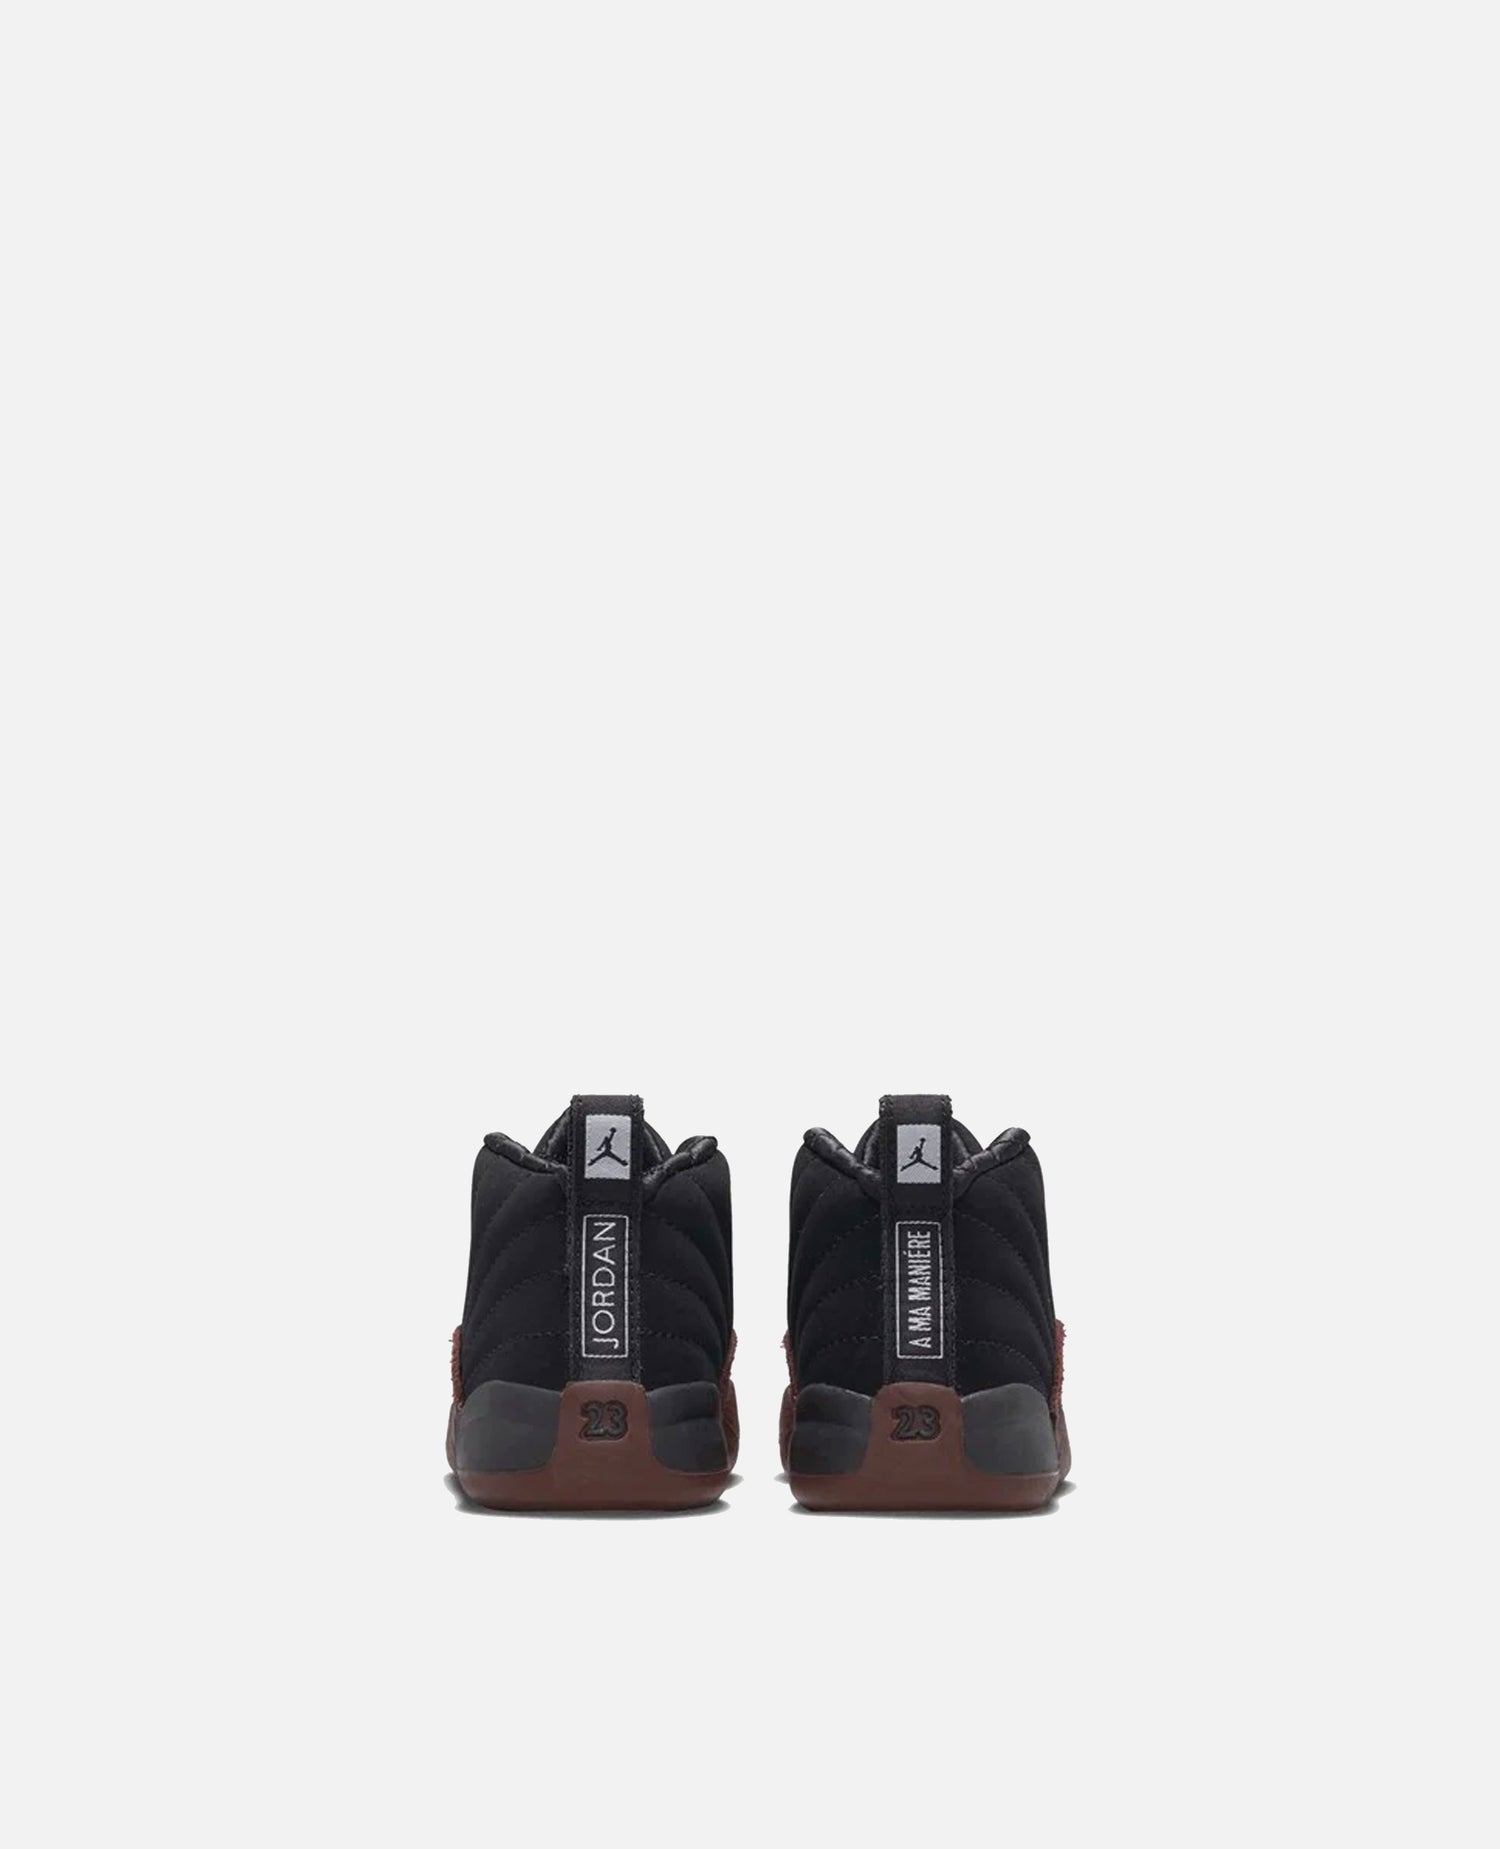 Jordan 12 Retro SP Baby/Toddler Shoes (Black/Black-Burgundy Crush)